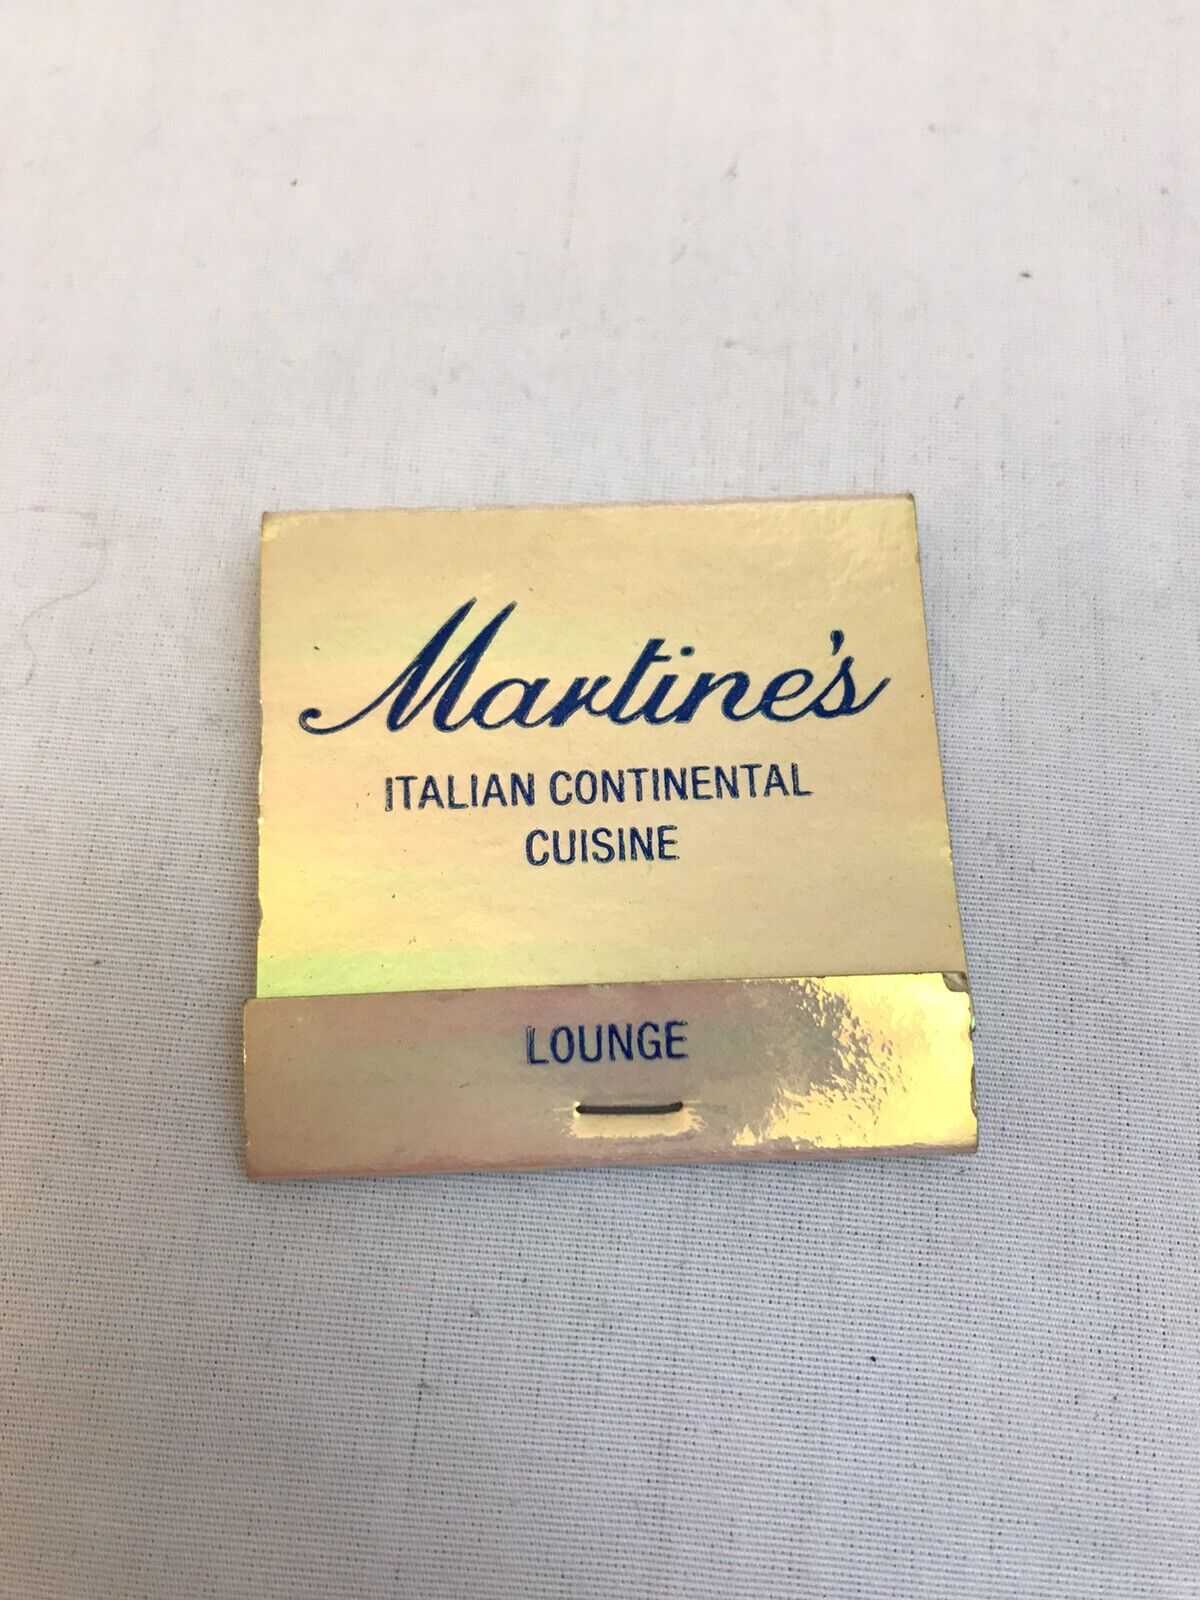 Martine’s Italian Continental Cuisine Restaurant Matchbook Used